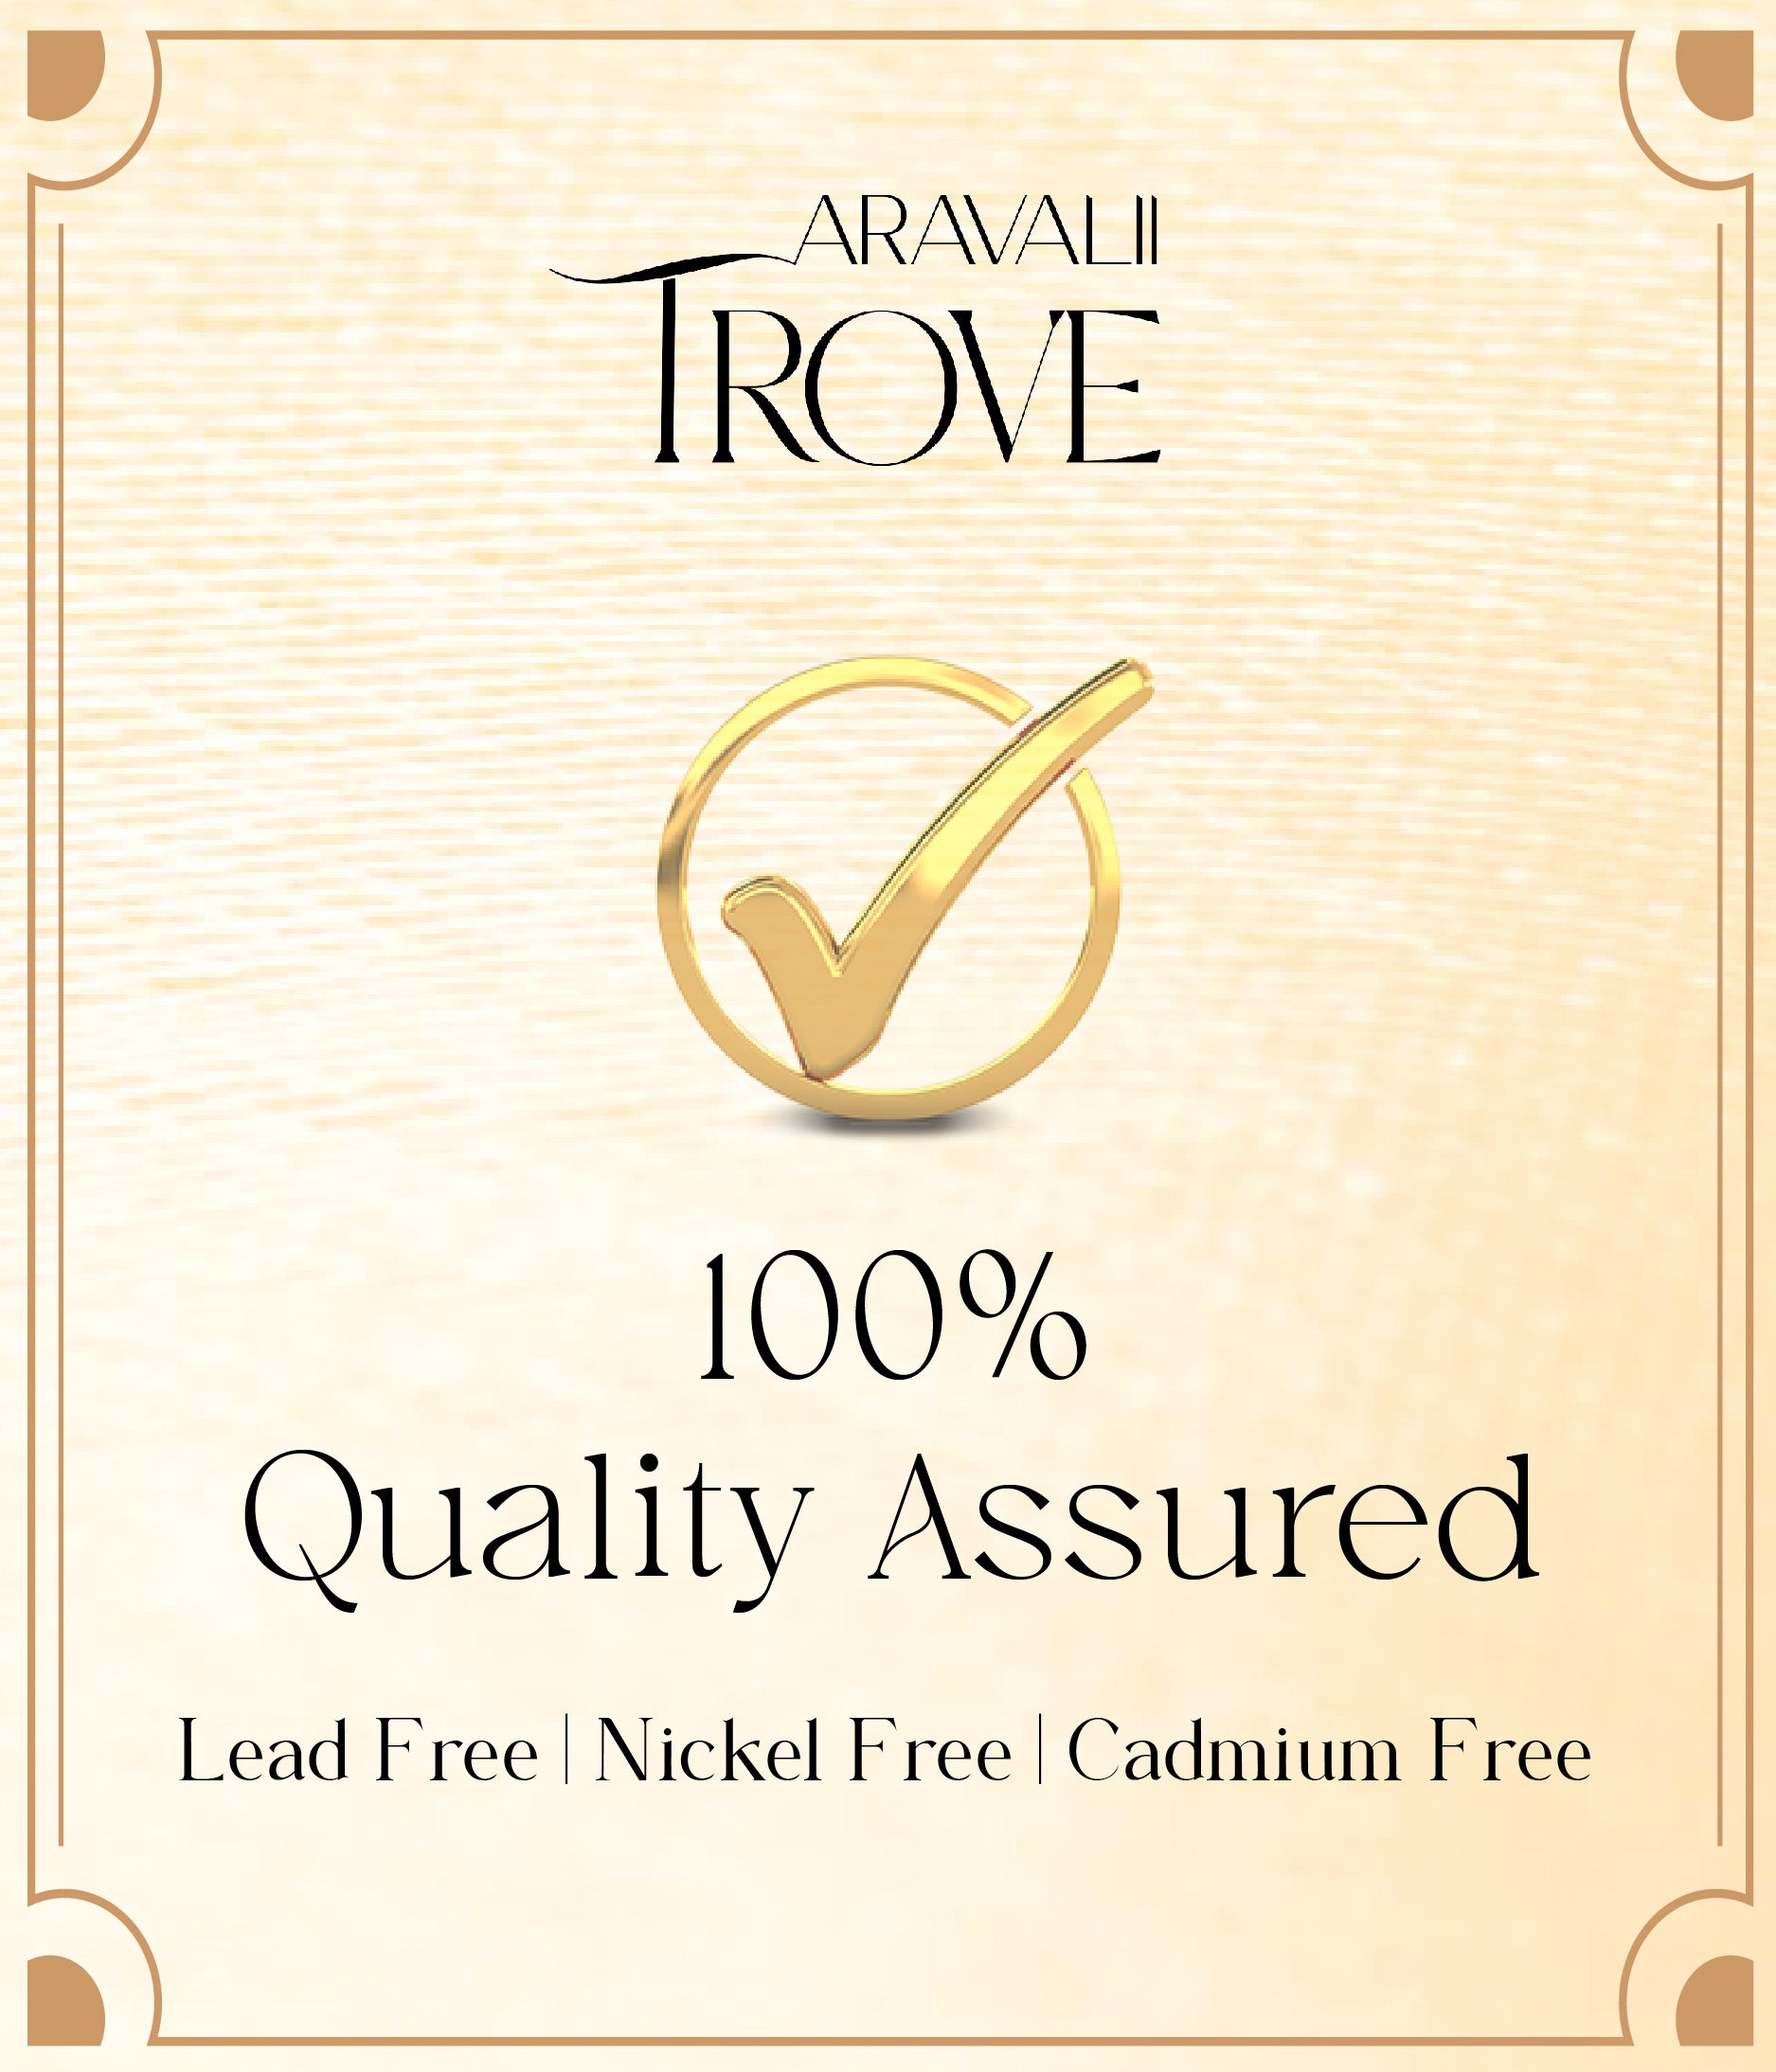 Aravalii Trove 100% Quality Assured 